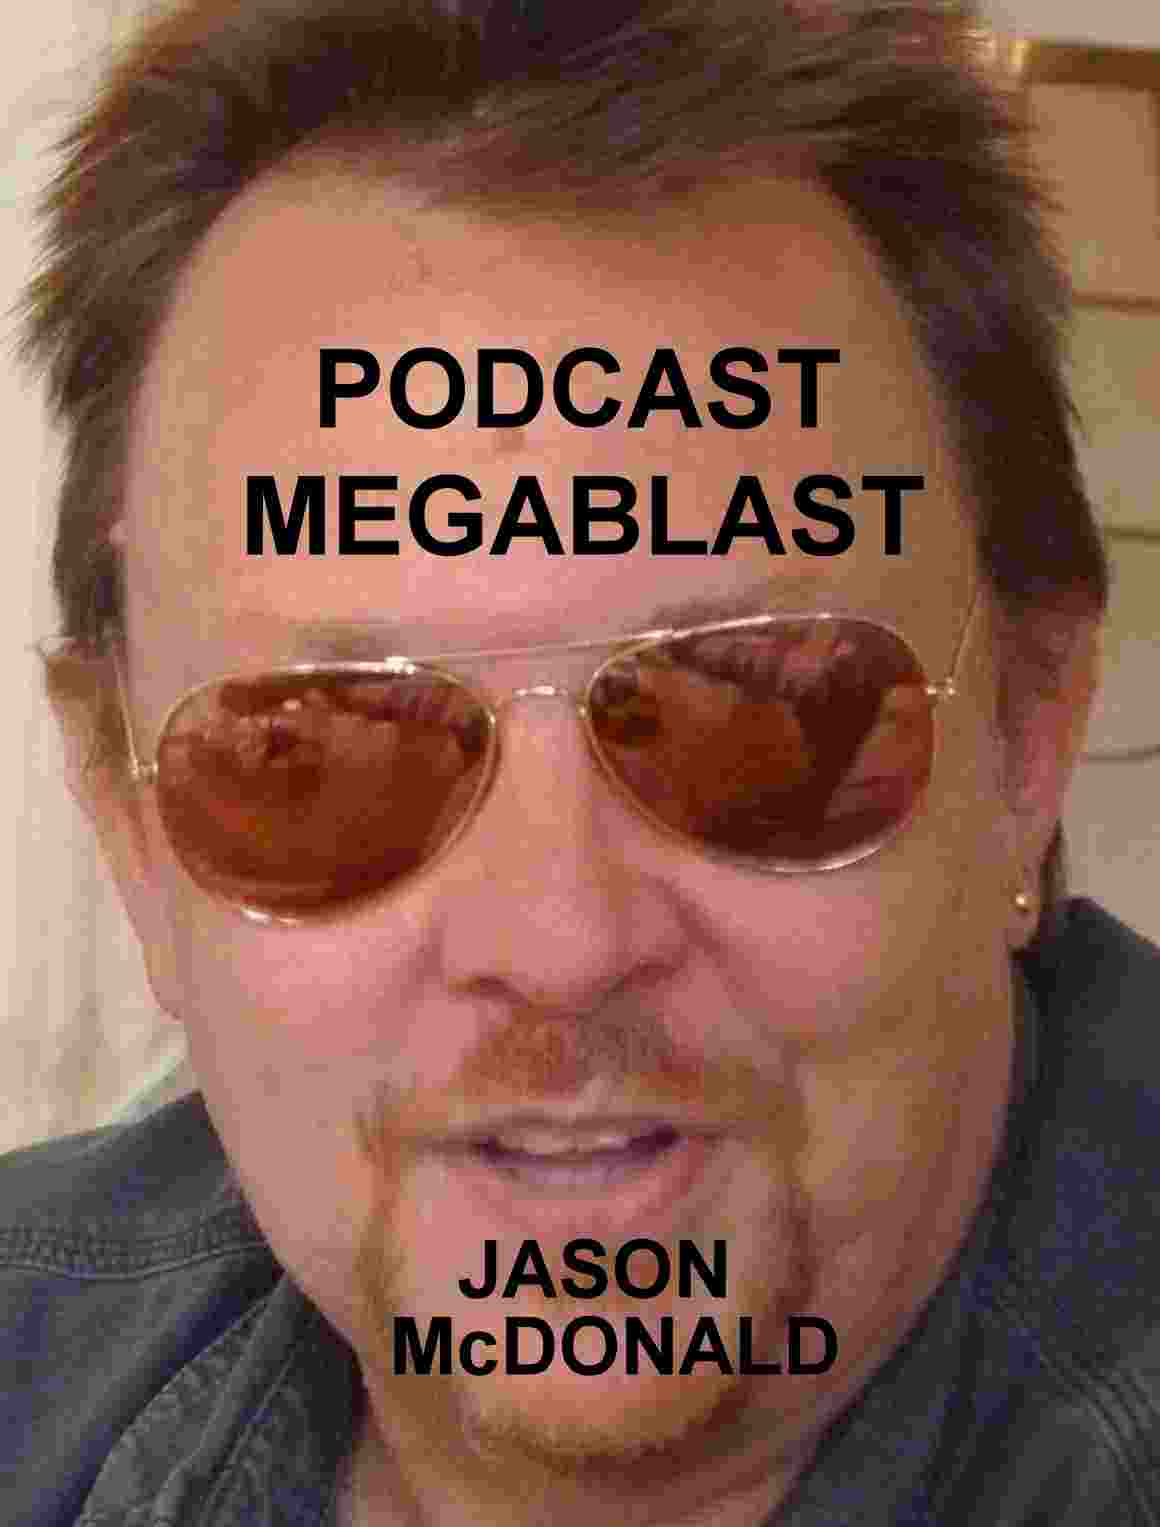 MEGABLAST PODCAST with JASON McDONALD